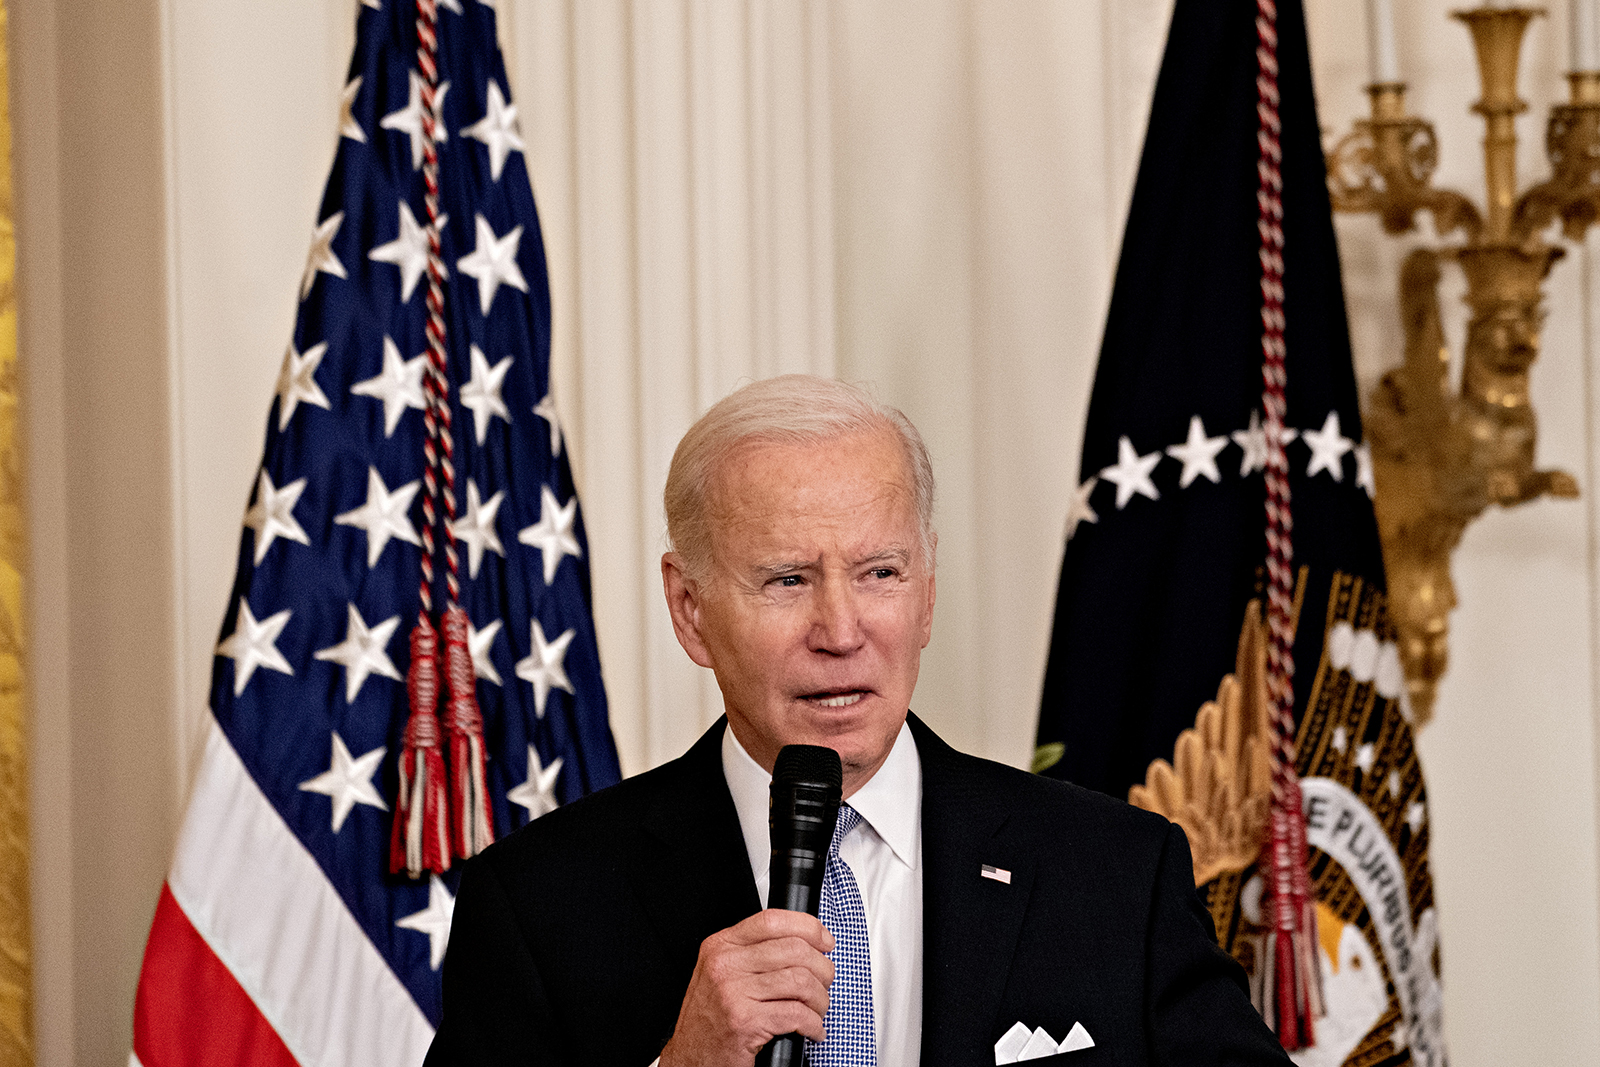 Joe Biden speaks during an event in Washington, DC, on Friday, January 20.